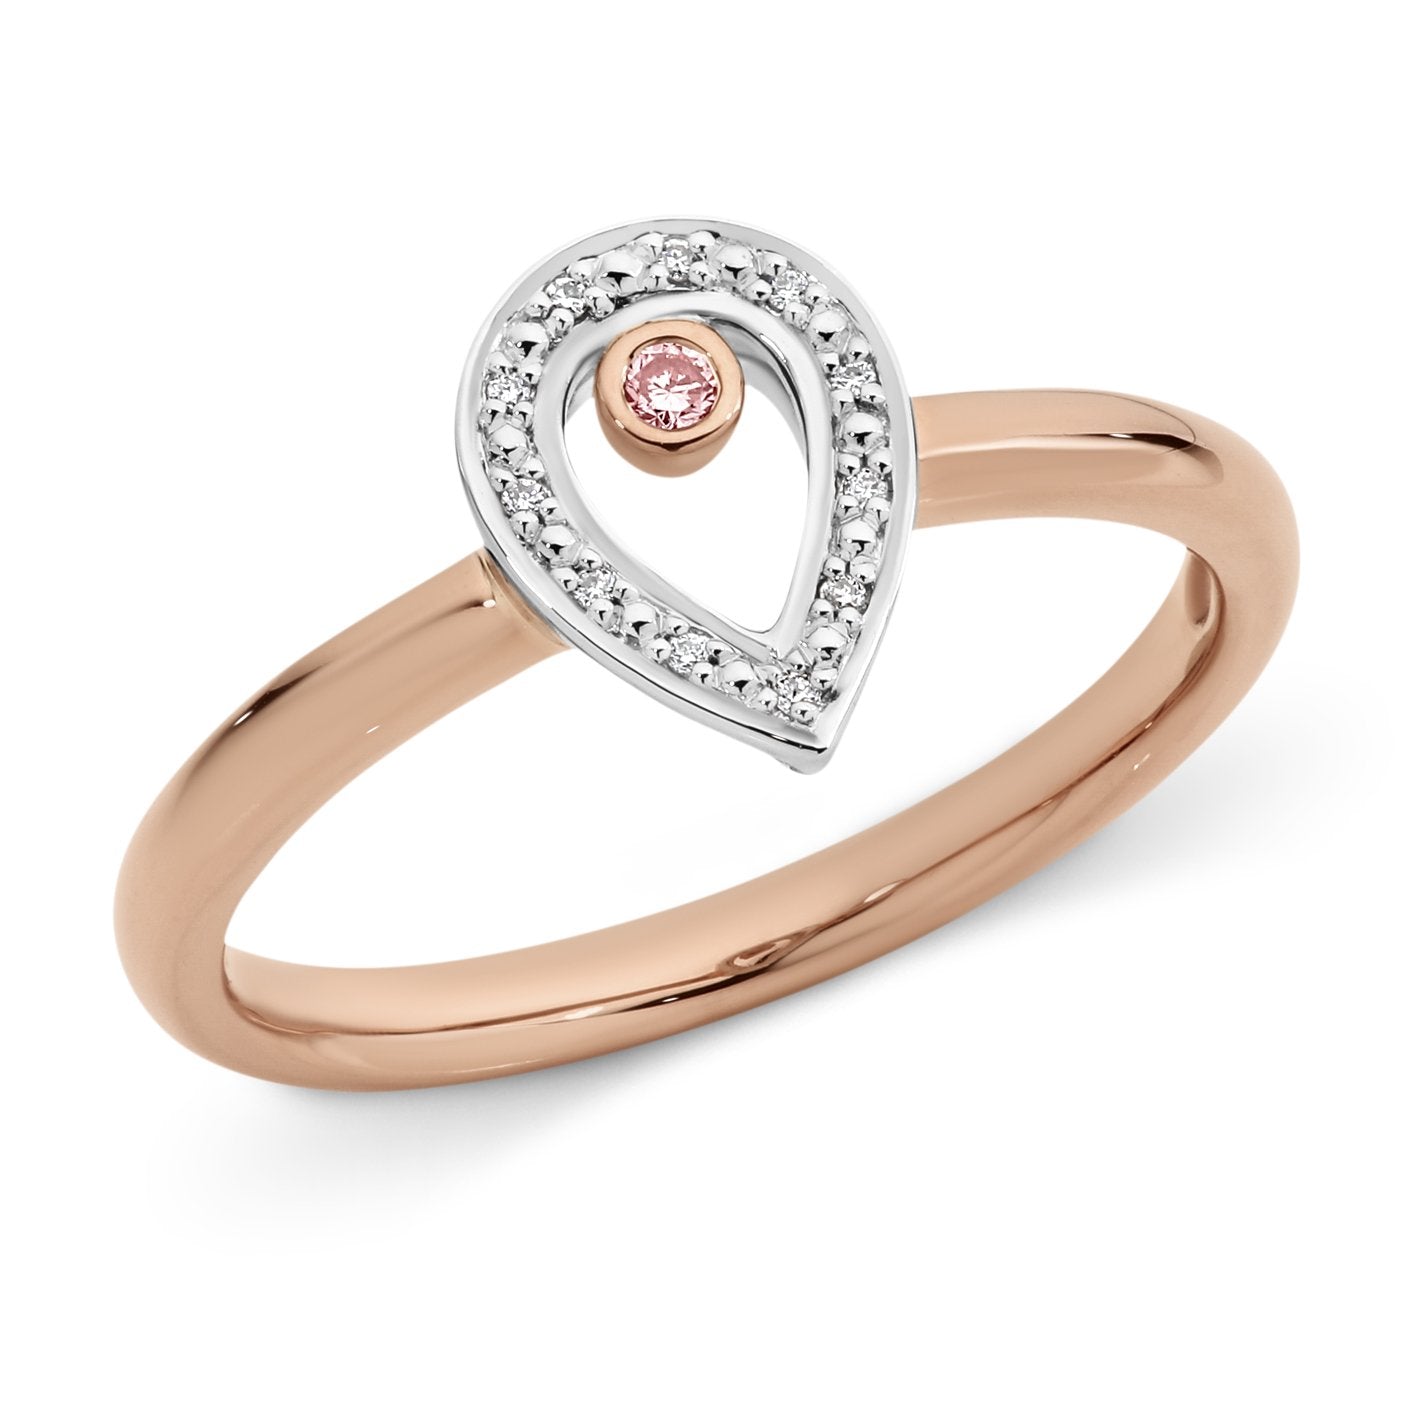 PINK CAVIAR 0.037ct Pink Diamond Ring in 9ct Rose & White Gold